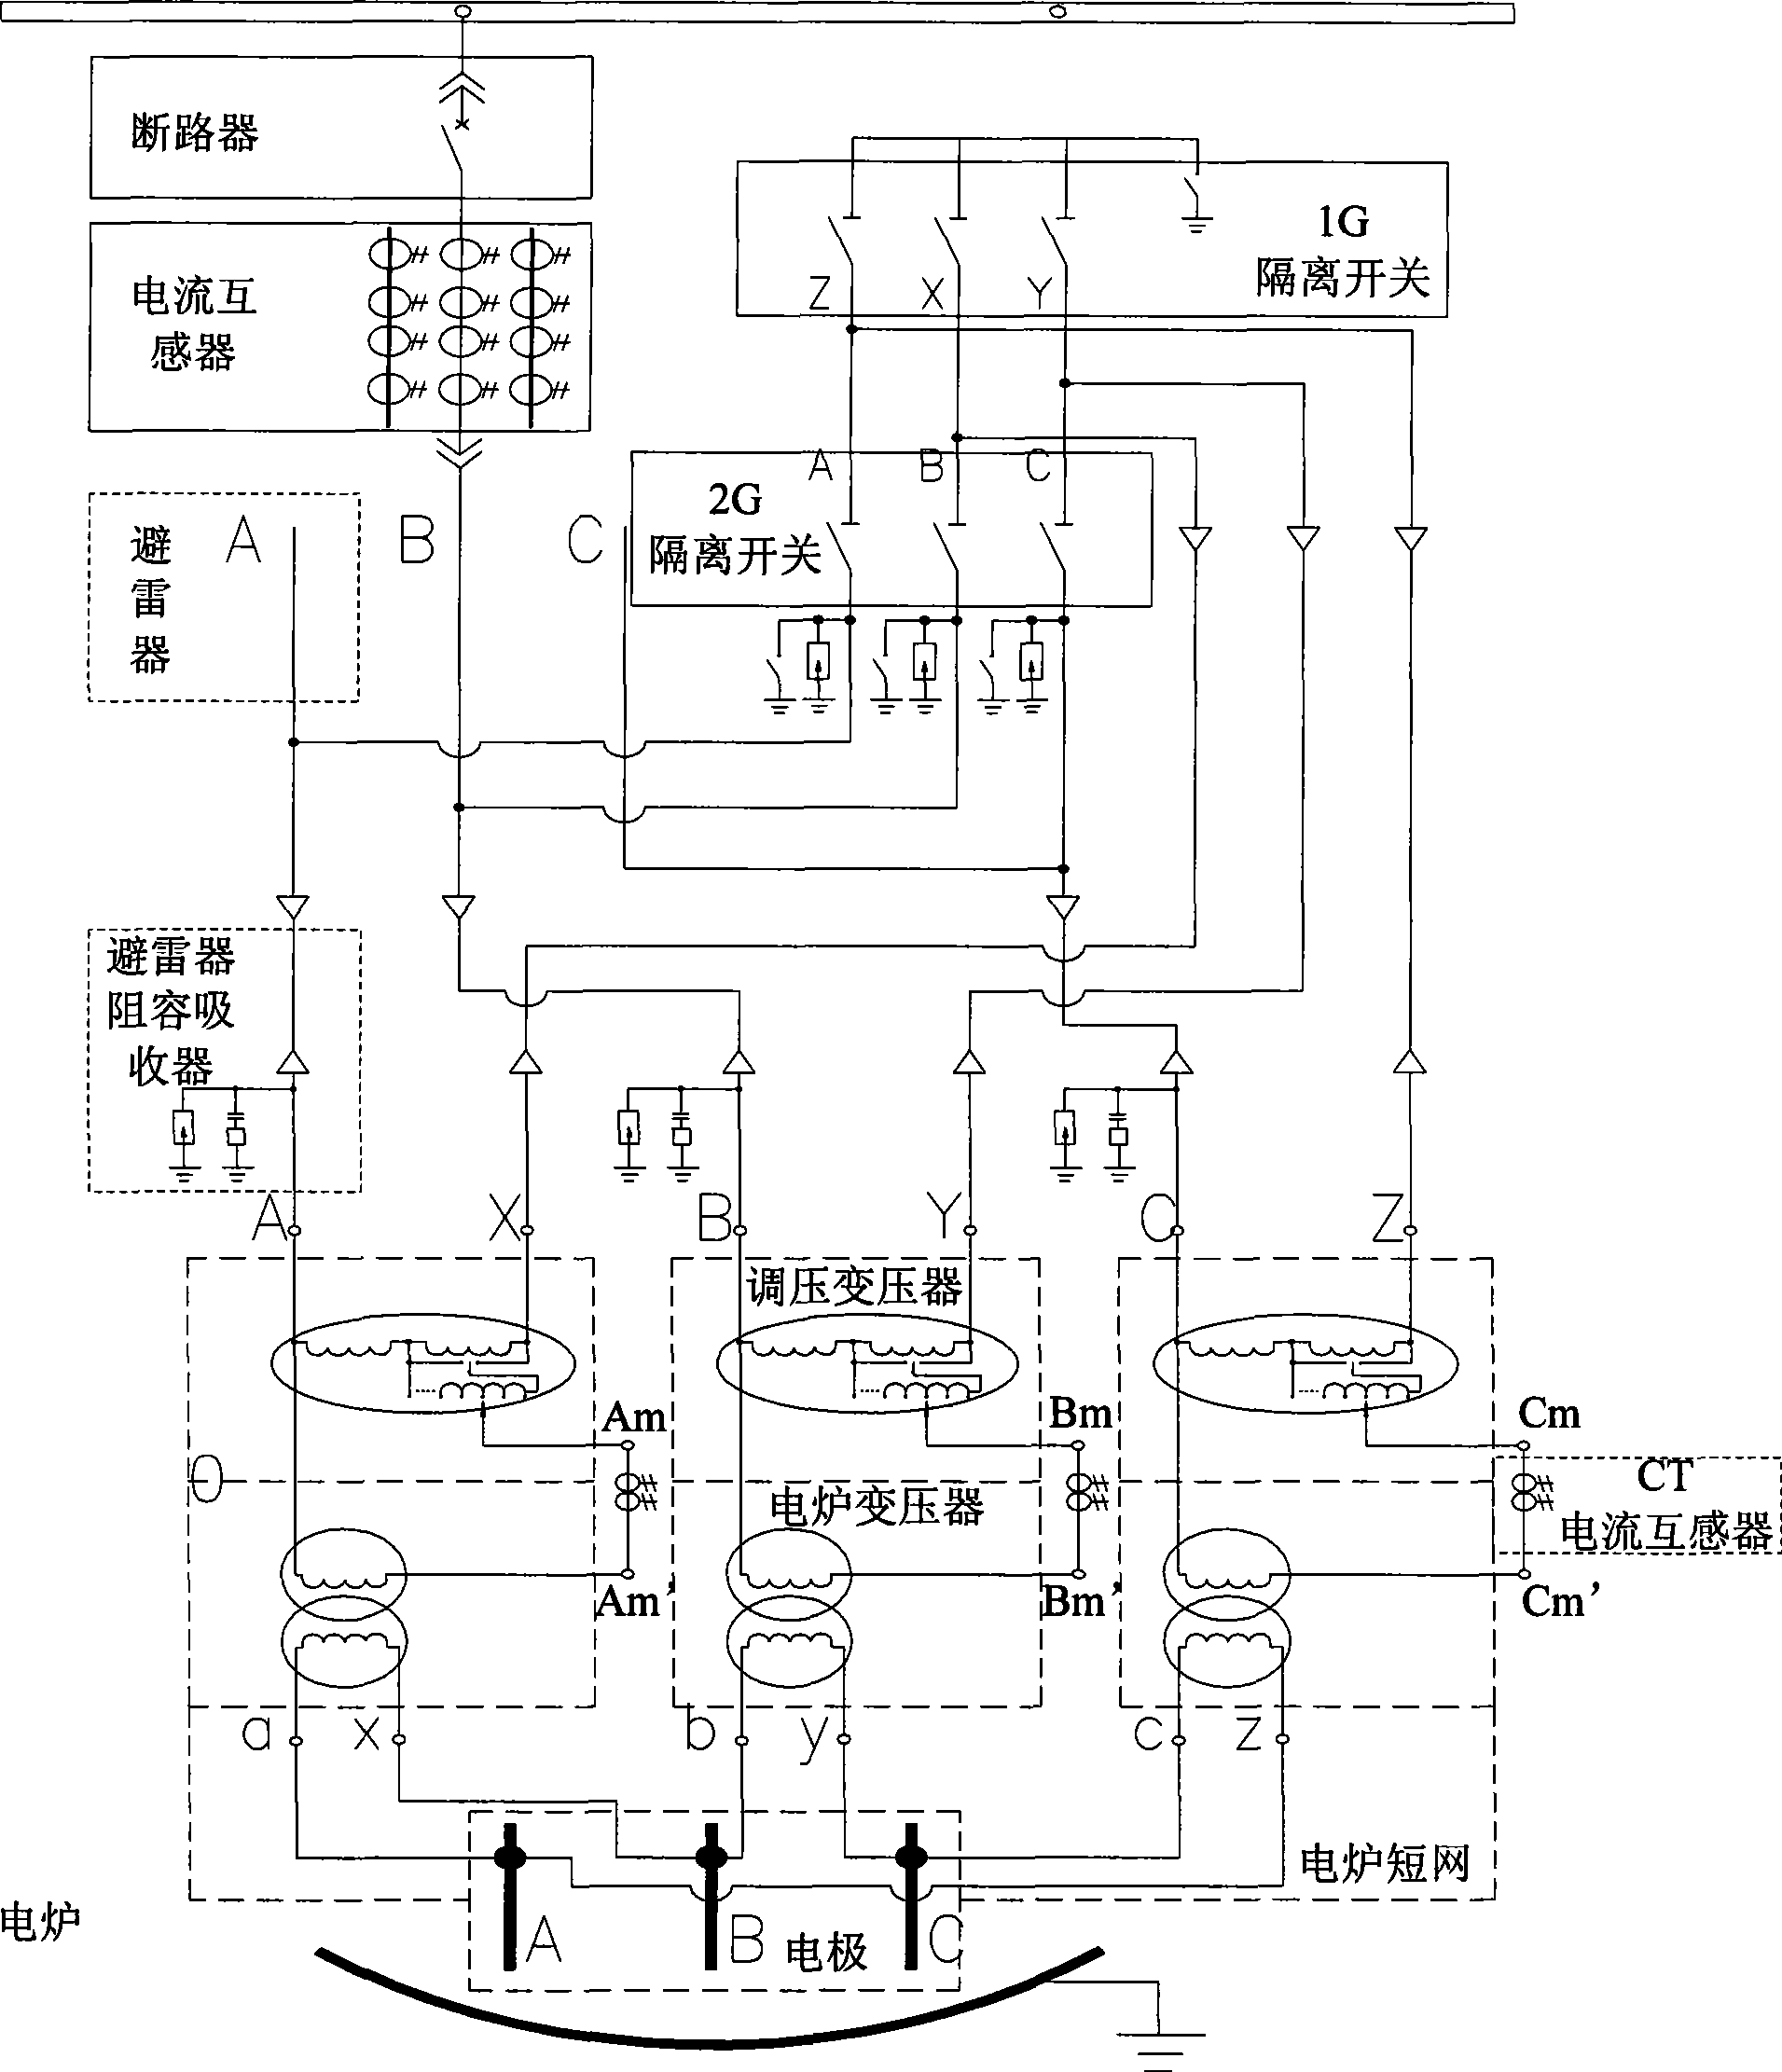 Method for measuring electrode current of buried arc furnace